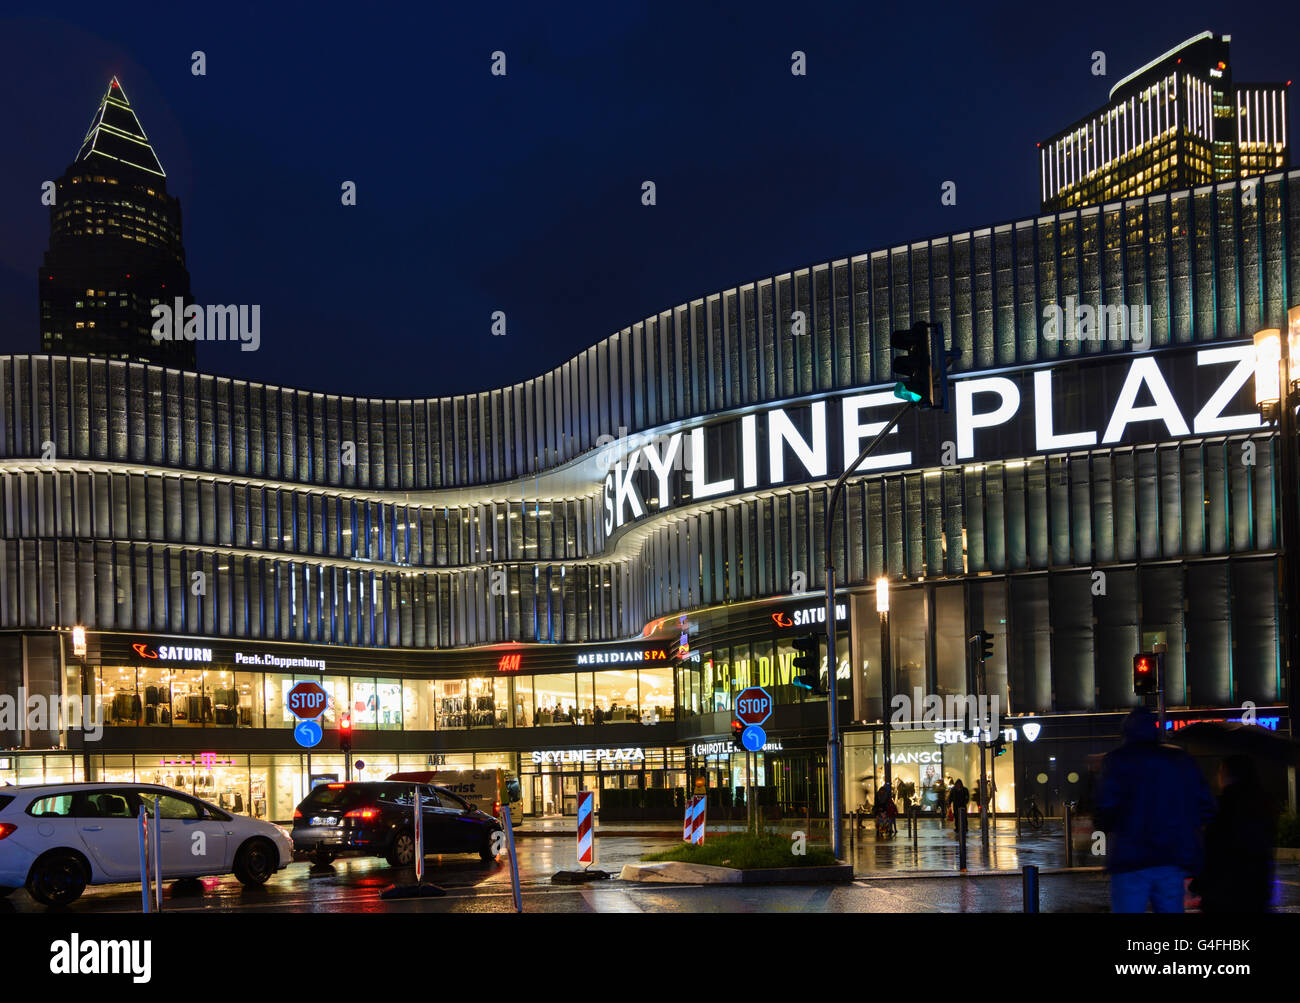 Skyline Plaza shopping center at night and rain with the Messeturm, Germany, Hessen, Hesse, , Frankfurt am Main Stock Photo